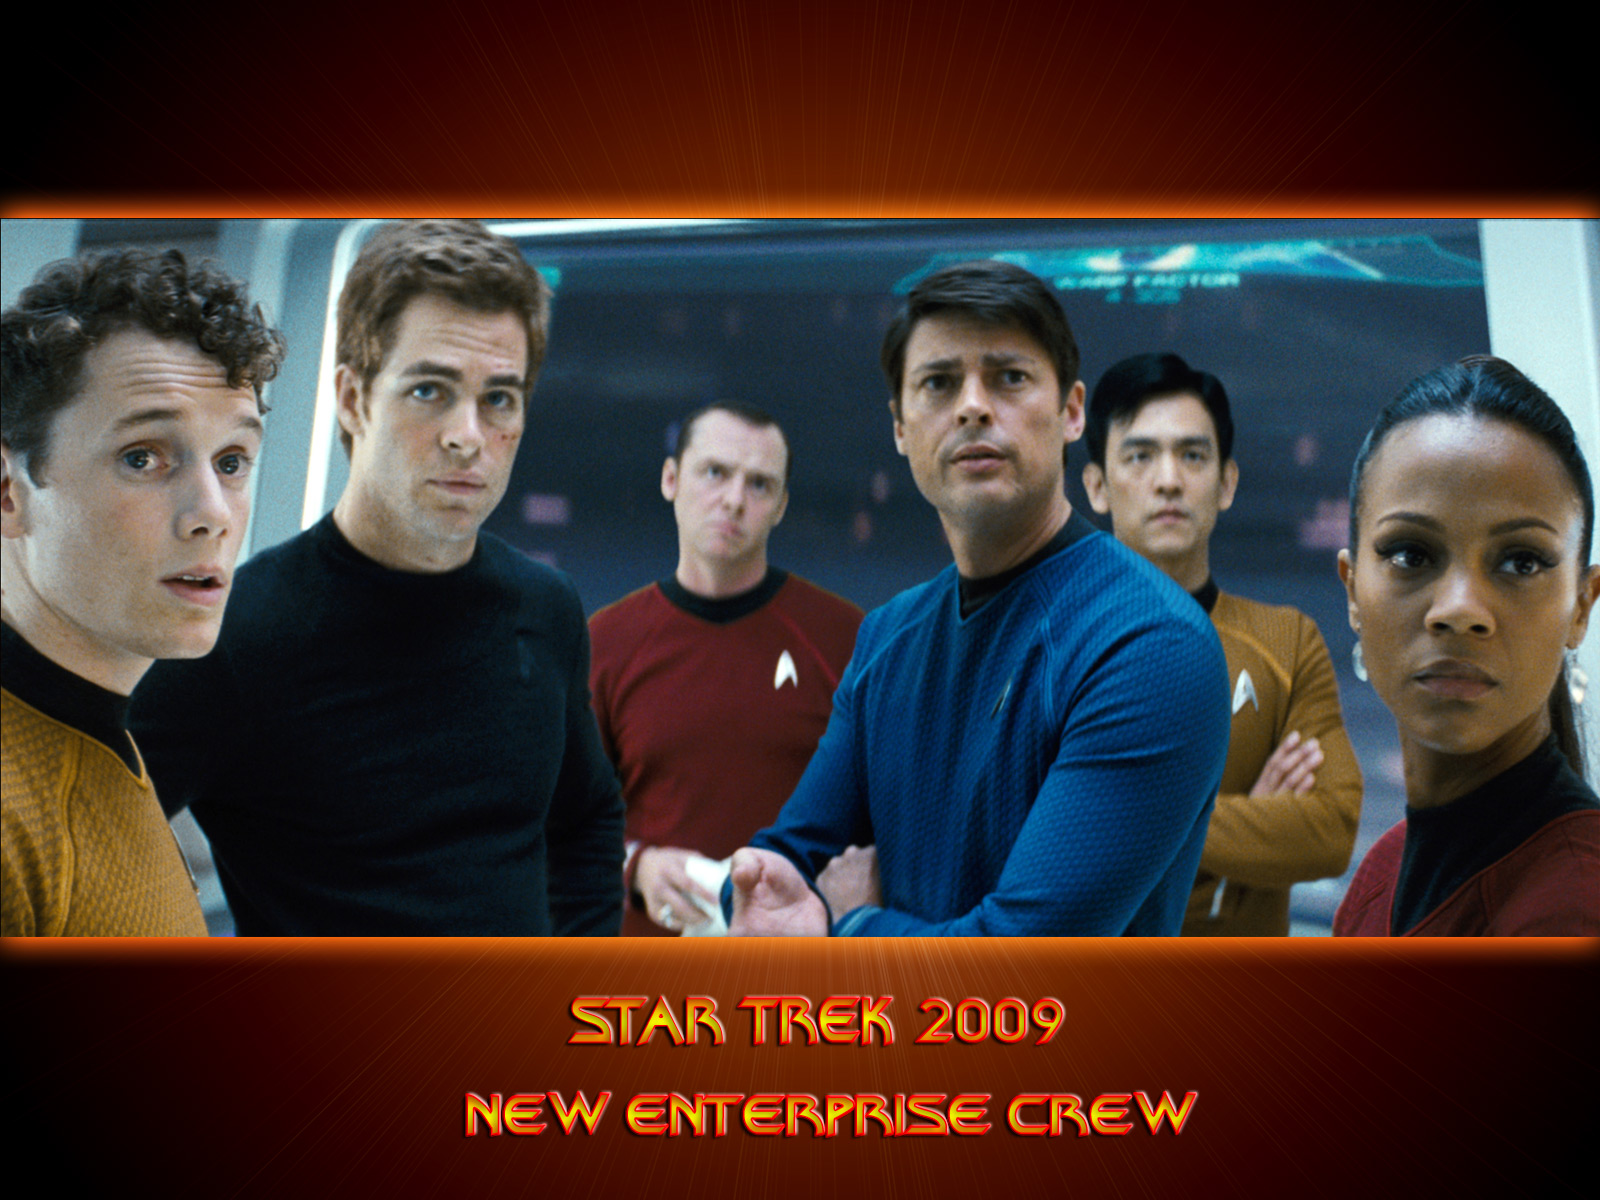 - Star Trek Movie 2009 New Enterprise Crew - free Star Trek computer desktop wallpaper, pictures, images.